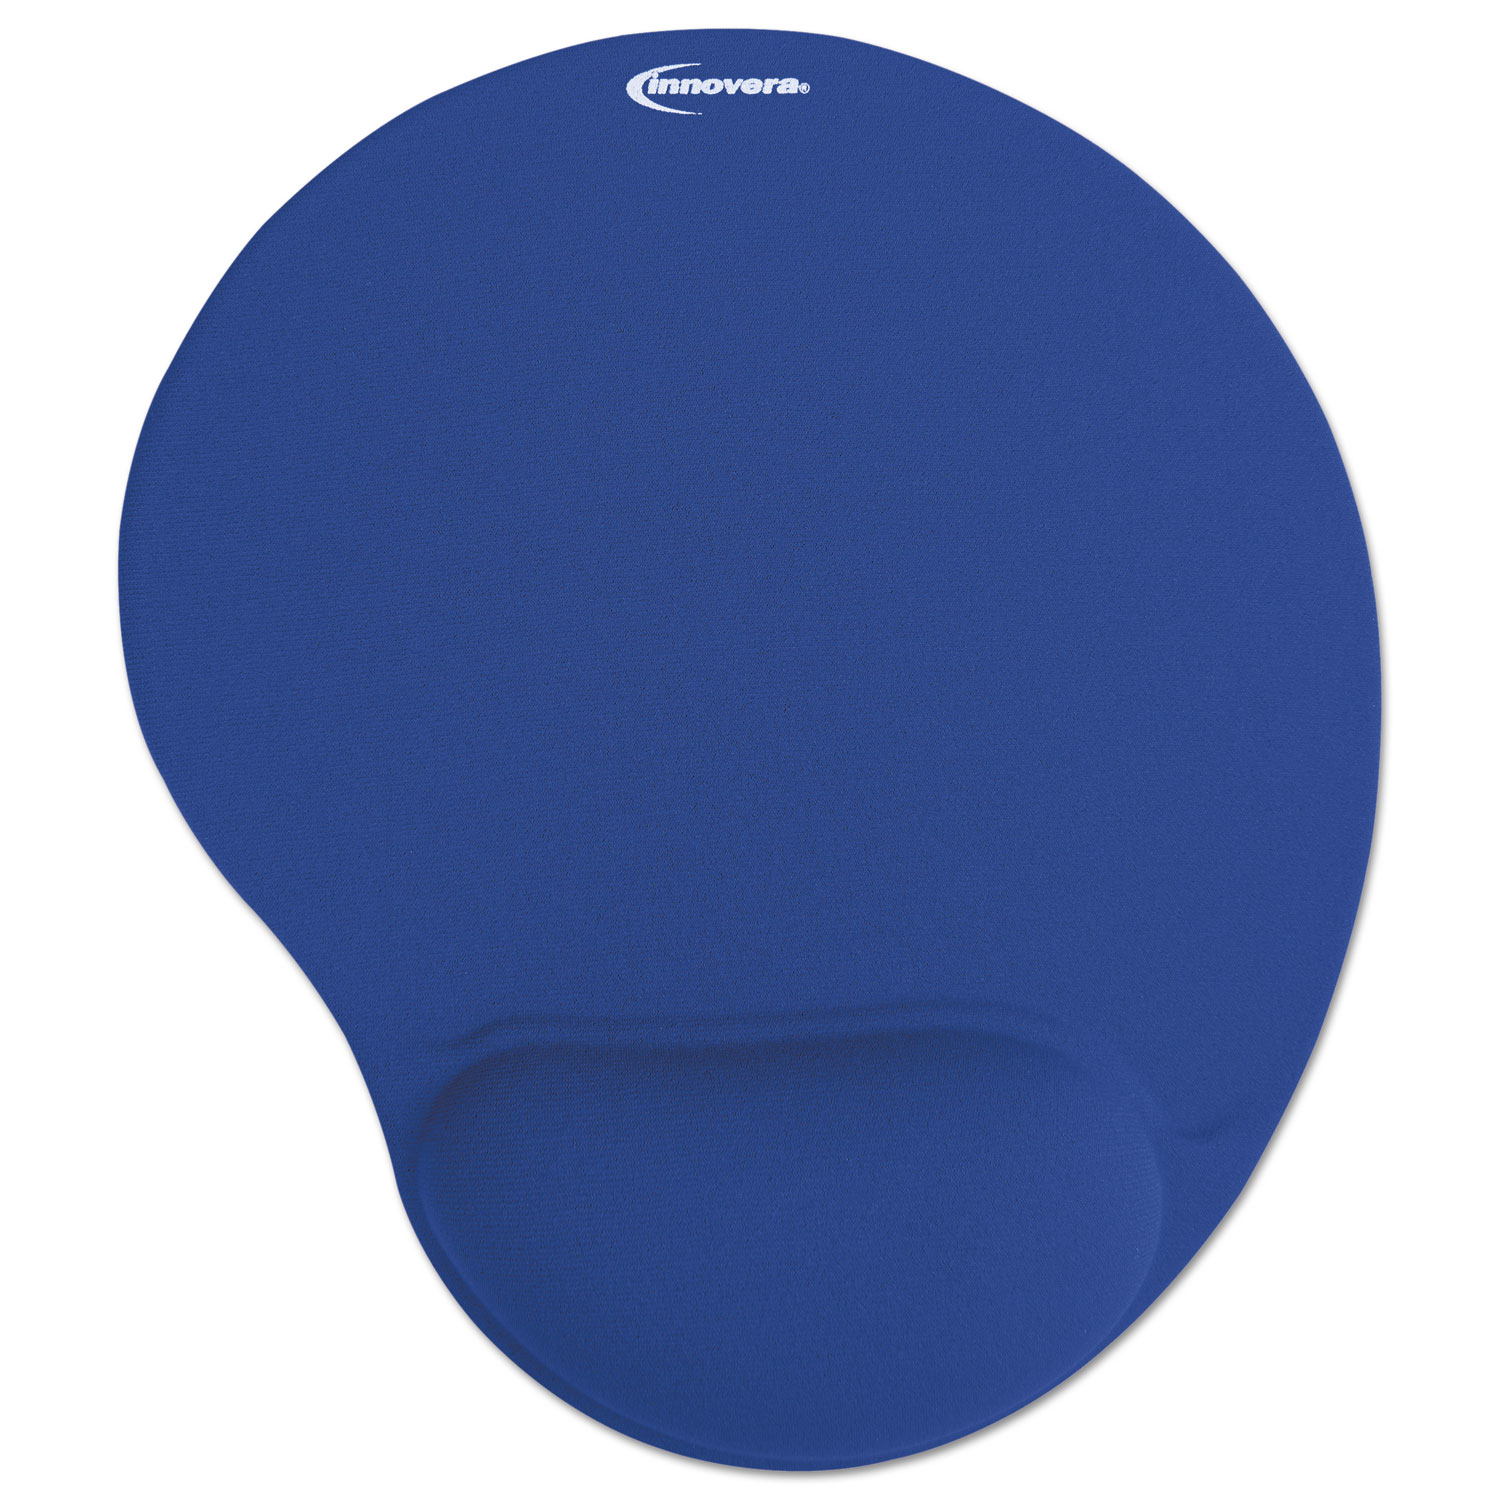 Mouse Pad w/Gel Wrist Pad, Nonskid Base, 10-3/8 x 8-7/8, Blue